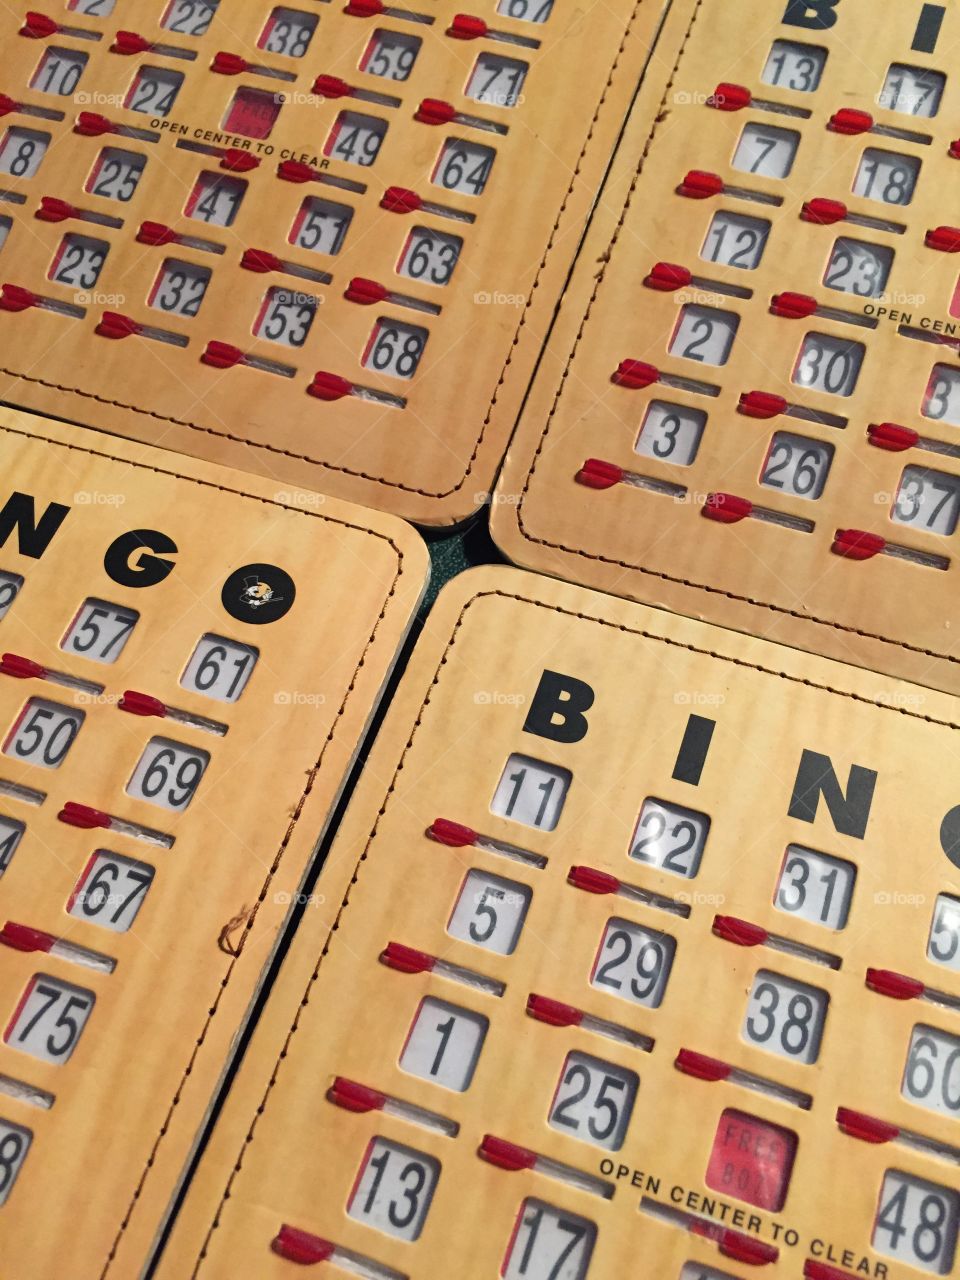 Bingo. Bingo!